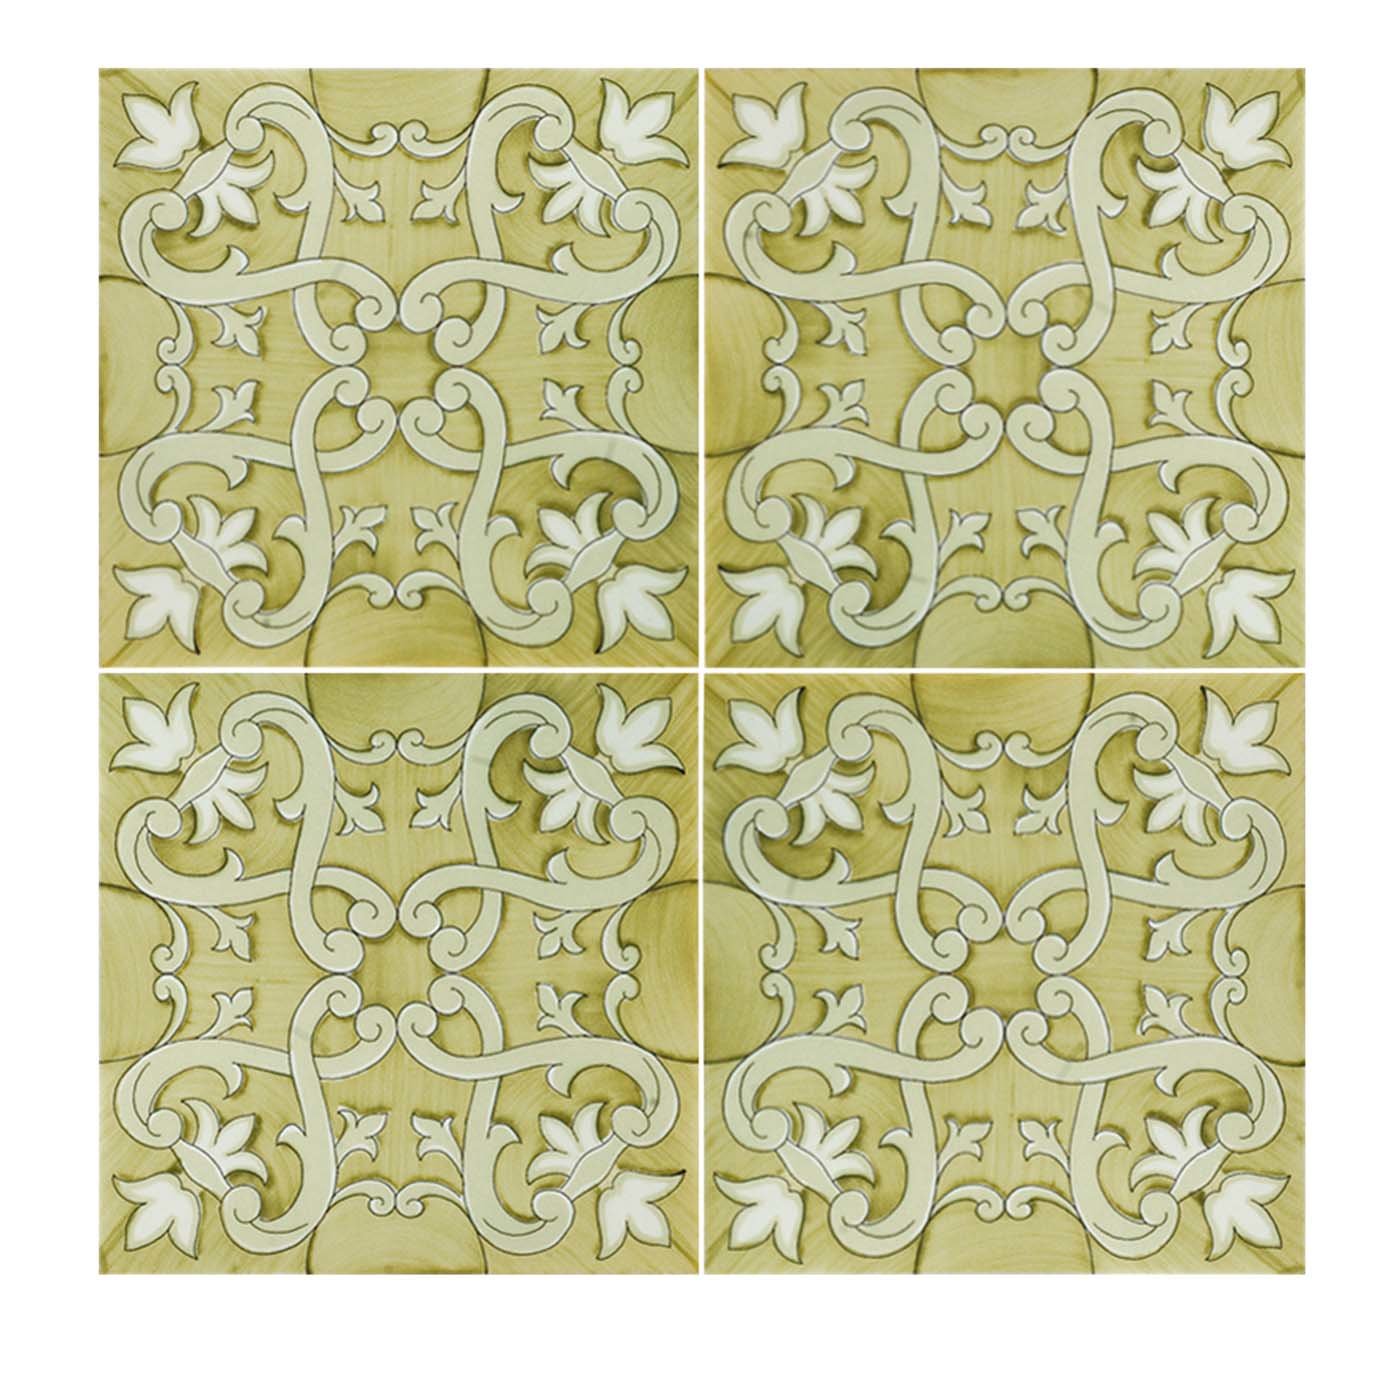 Set of 25 Recamone Green Tiles Fiori Scuri Collection  - Main view